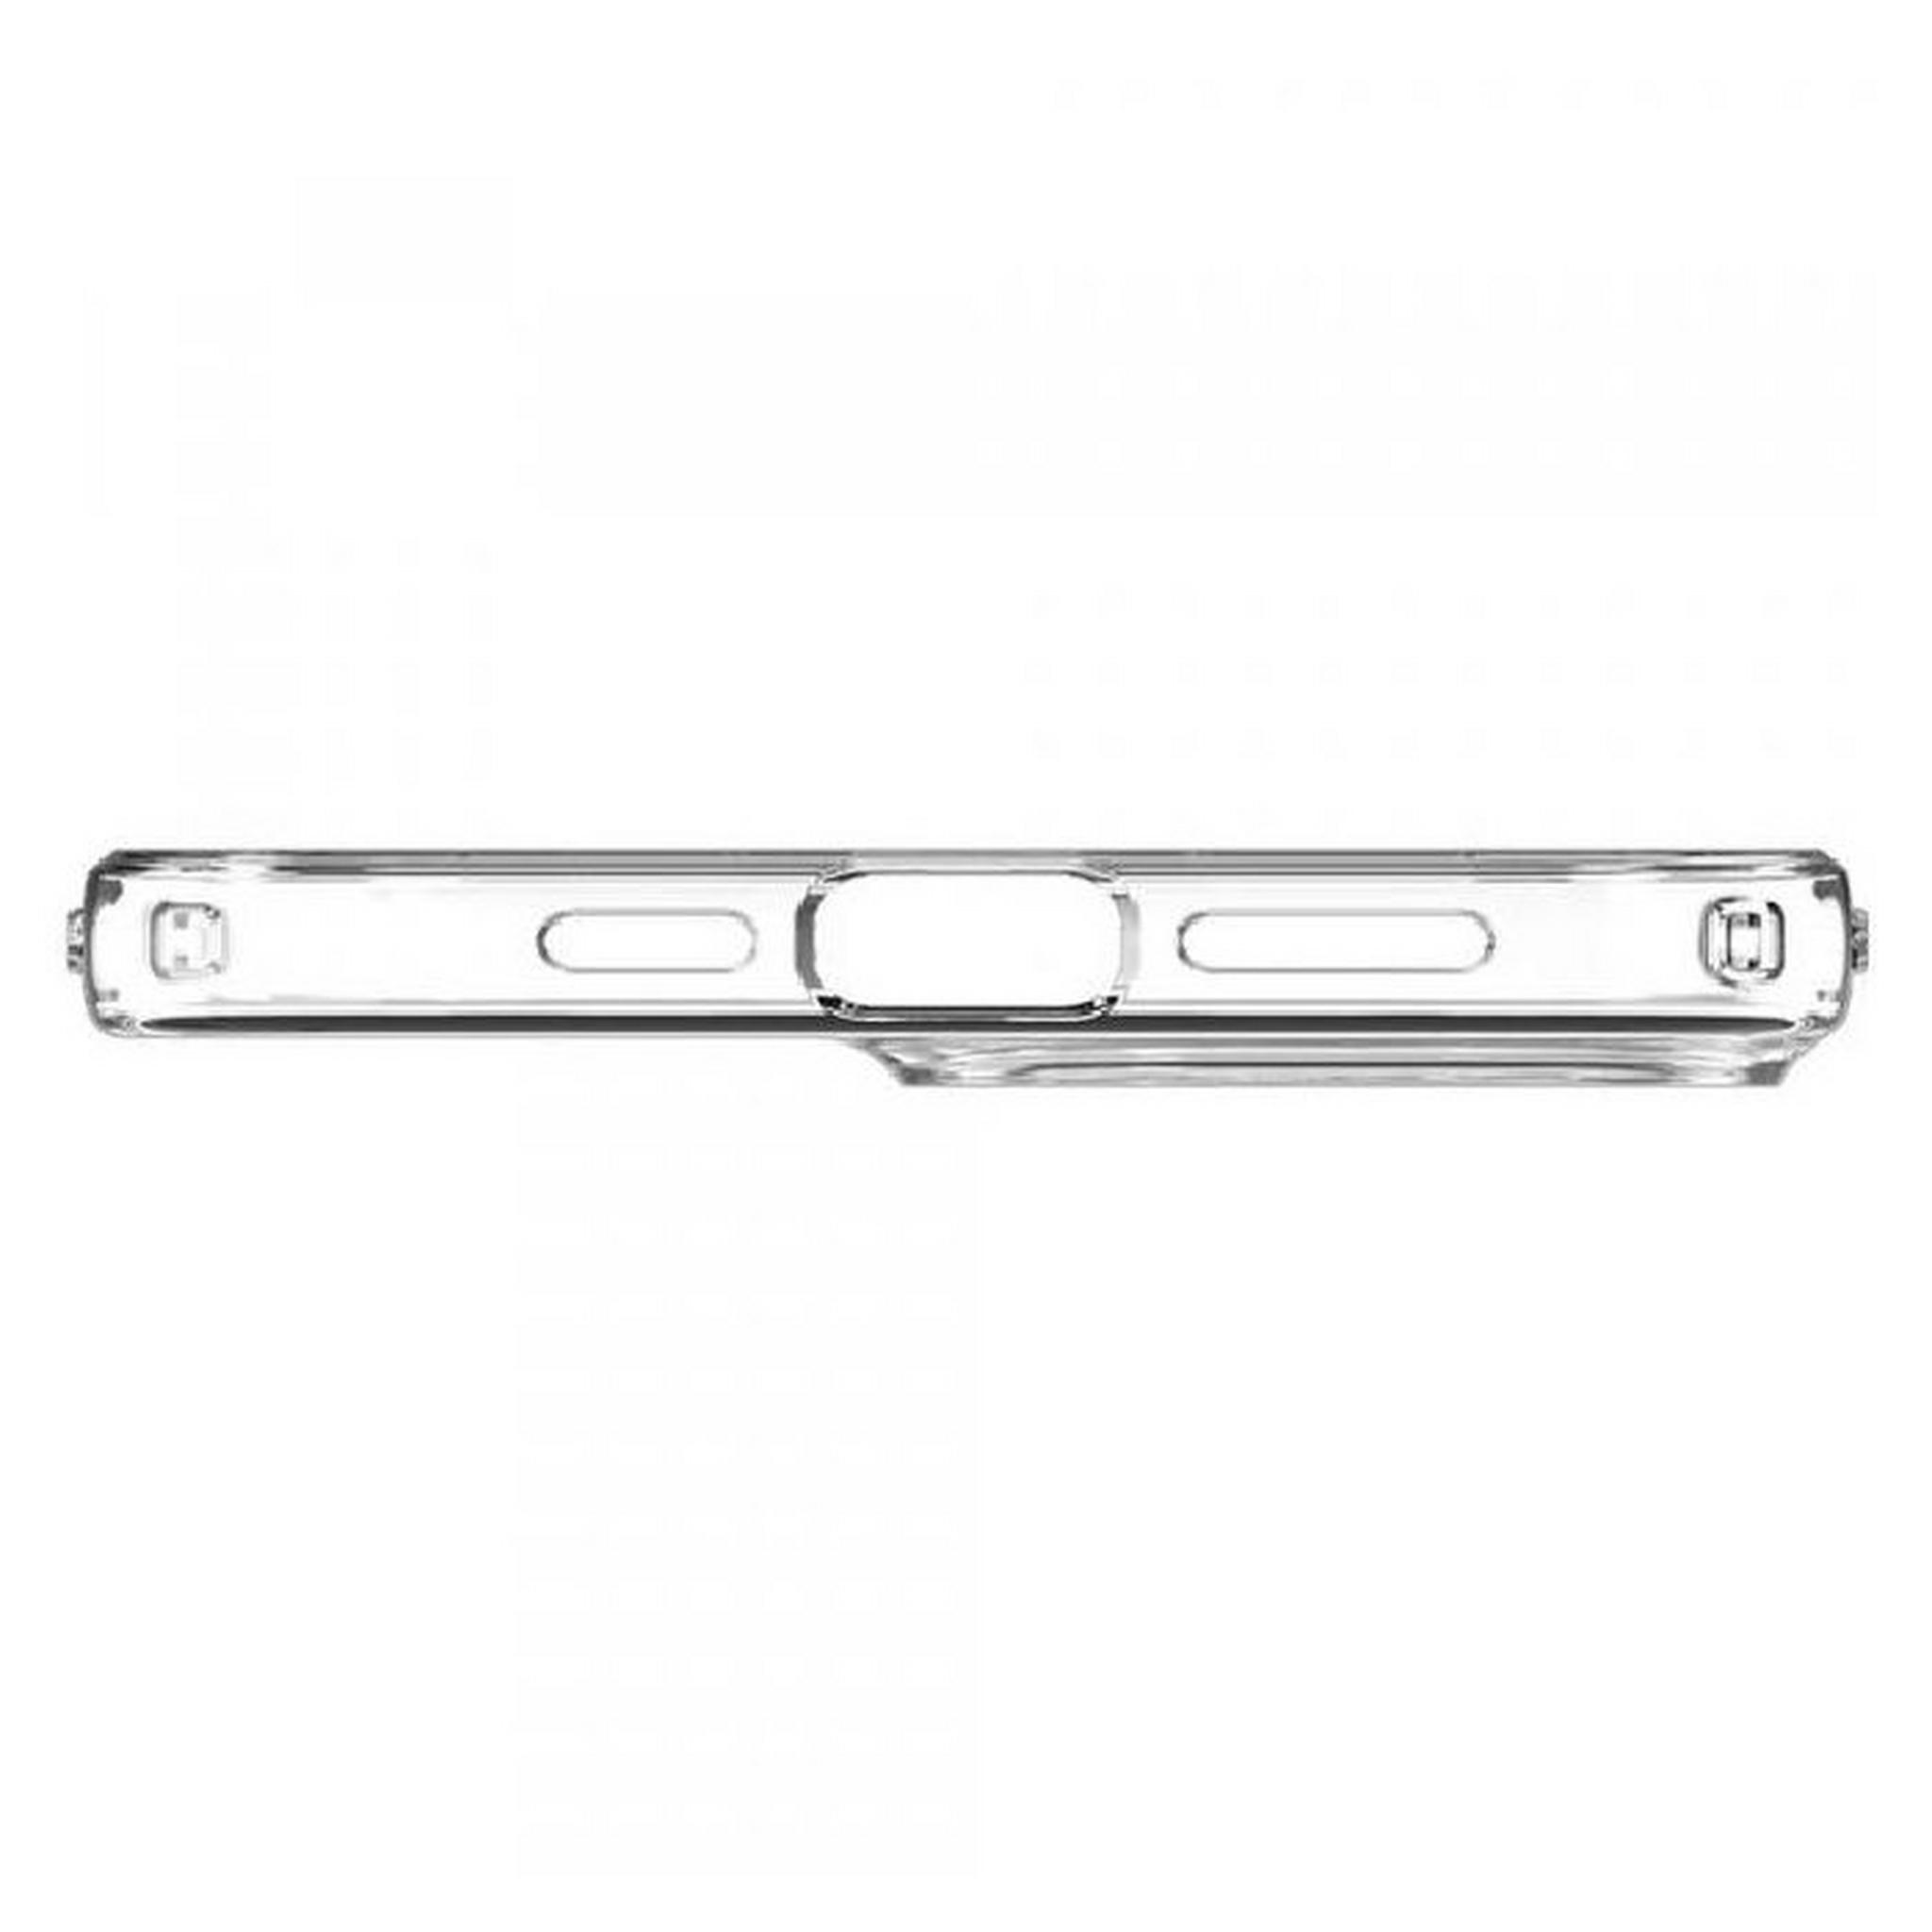 Spigen Crystal Flex iPhone 13 Mini Case - Crystal Clear